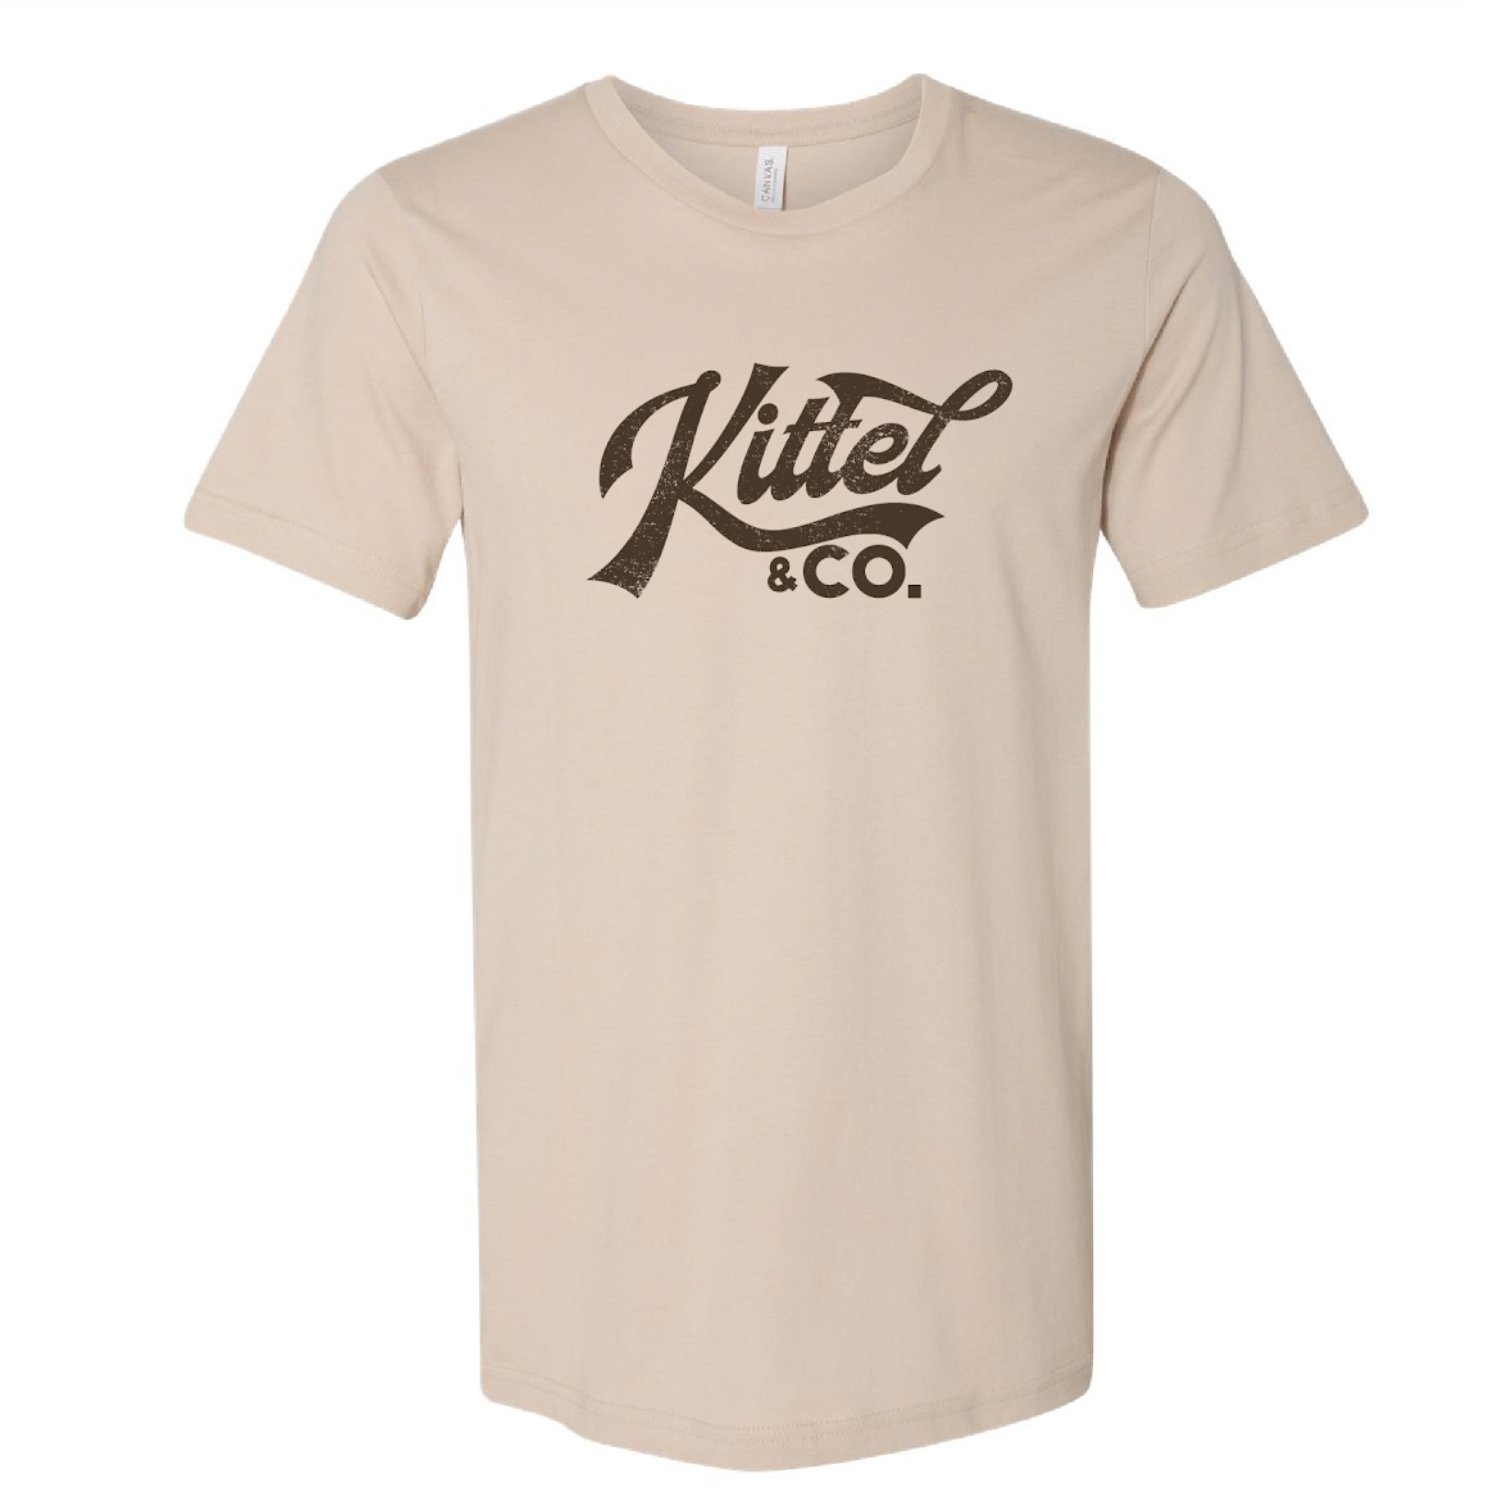 Kittel & Co. Script Logo T-Shirt - Tan